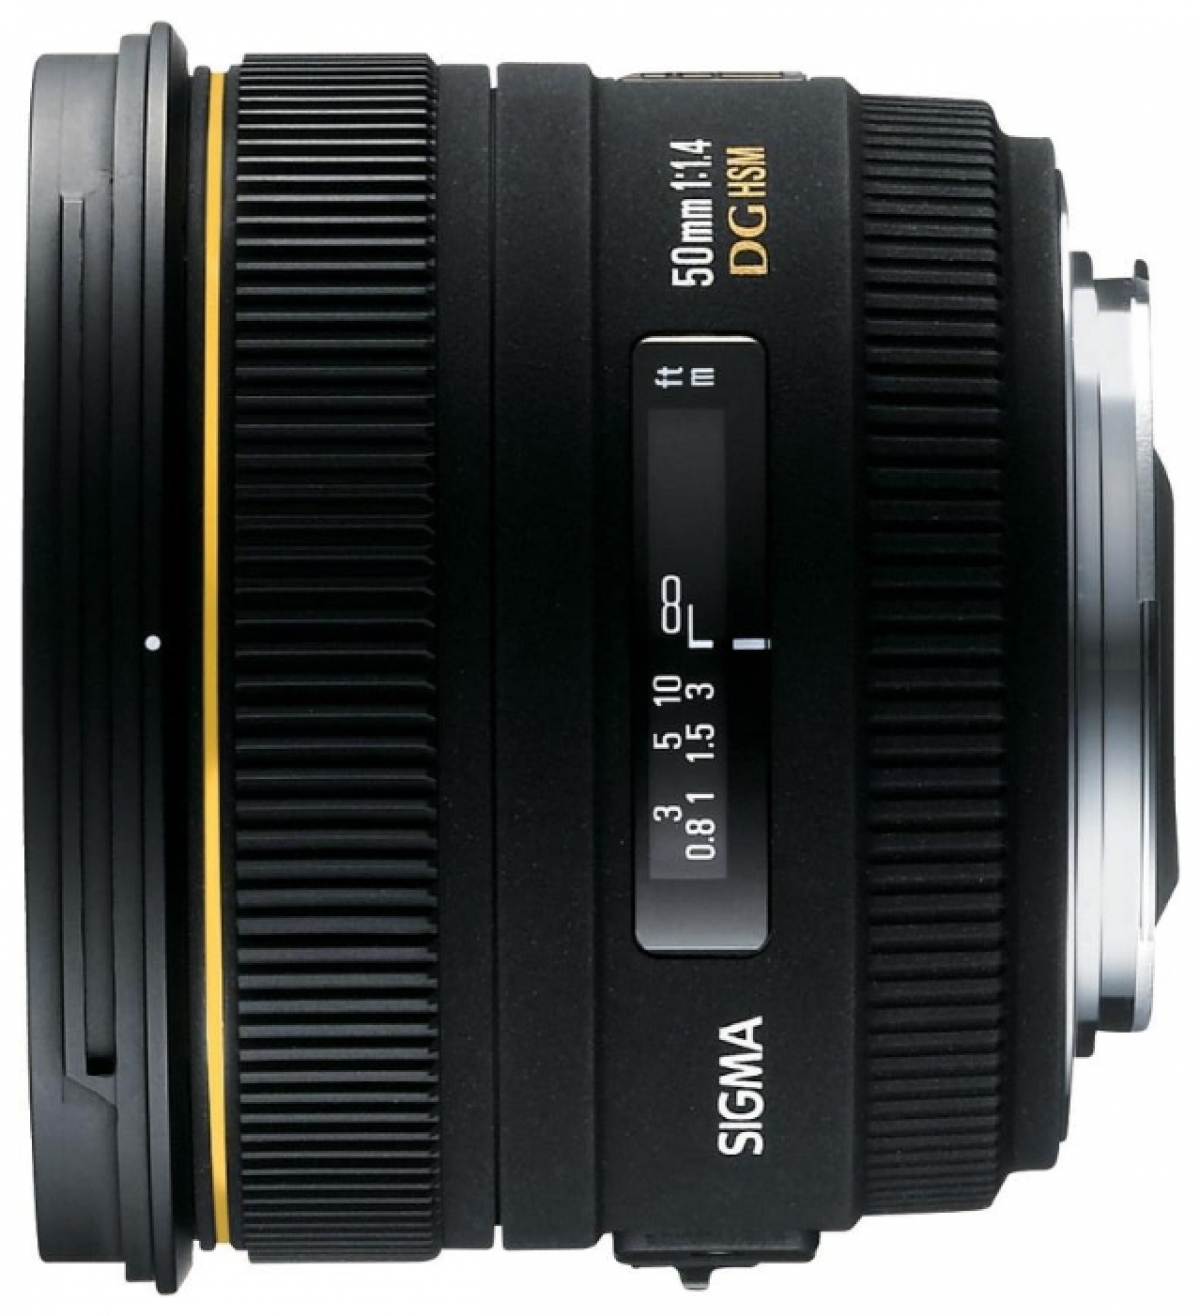 Sigma 50mm f 1.4 hsm. Sigma 50mm 1.4 Canon. Sigma af 50mm f/1.4 ex. Sigma 50mm 1.4 ex DG HSM Canon. Sigma 50mm 1.4 Nikon.